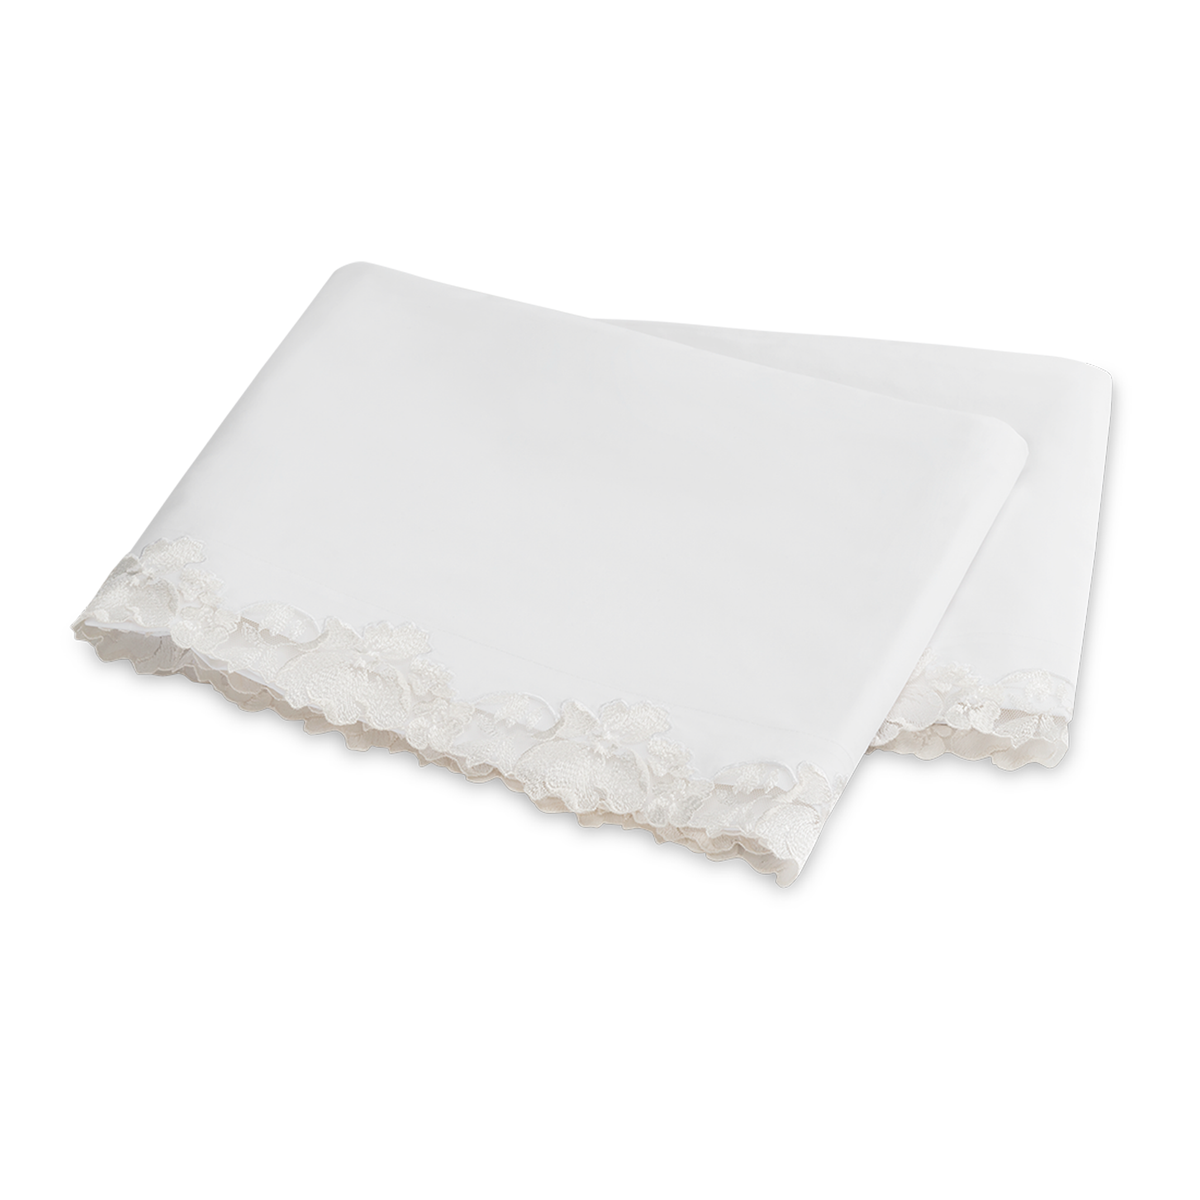 Flat Sheet of Matouk Virginia Bedding in Color White